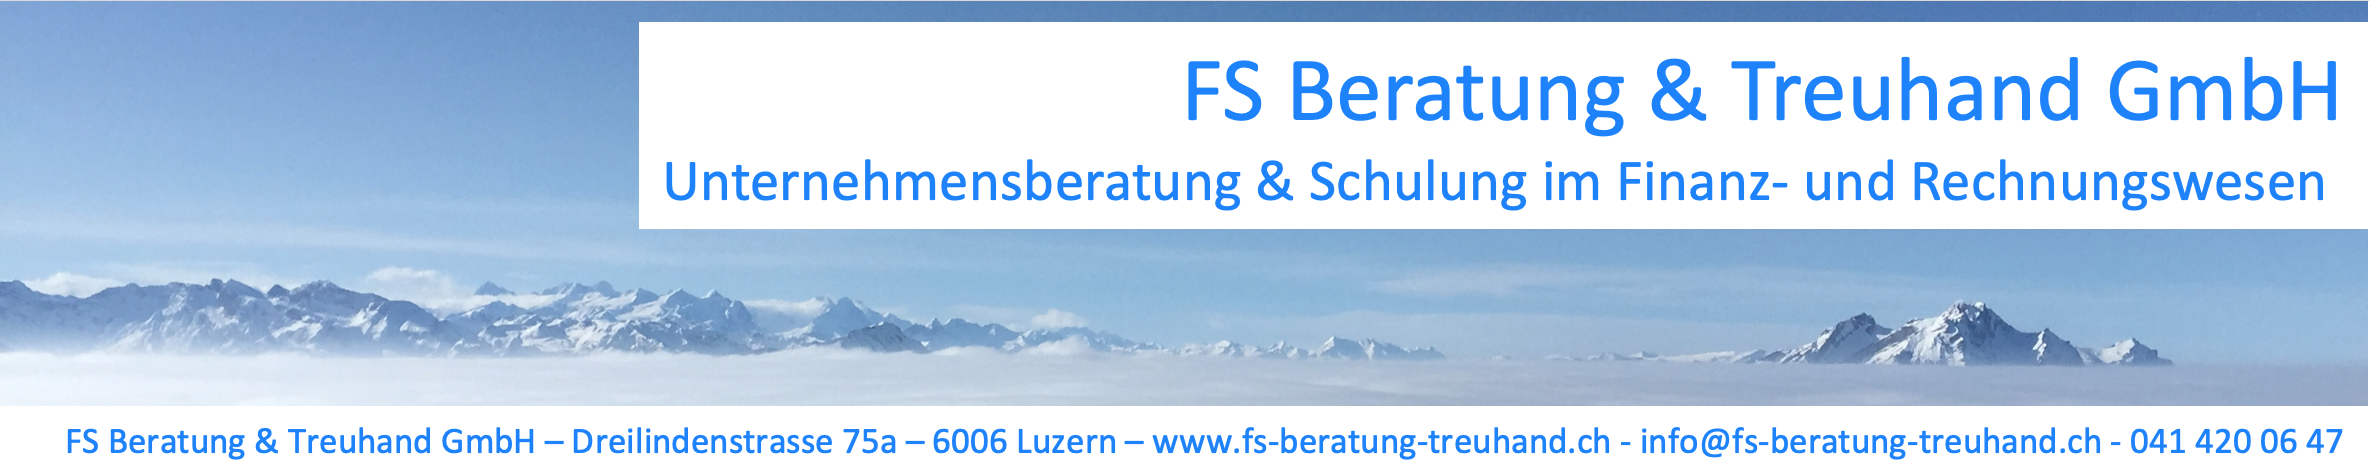 FS Beratung & Treuhand GmbH